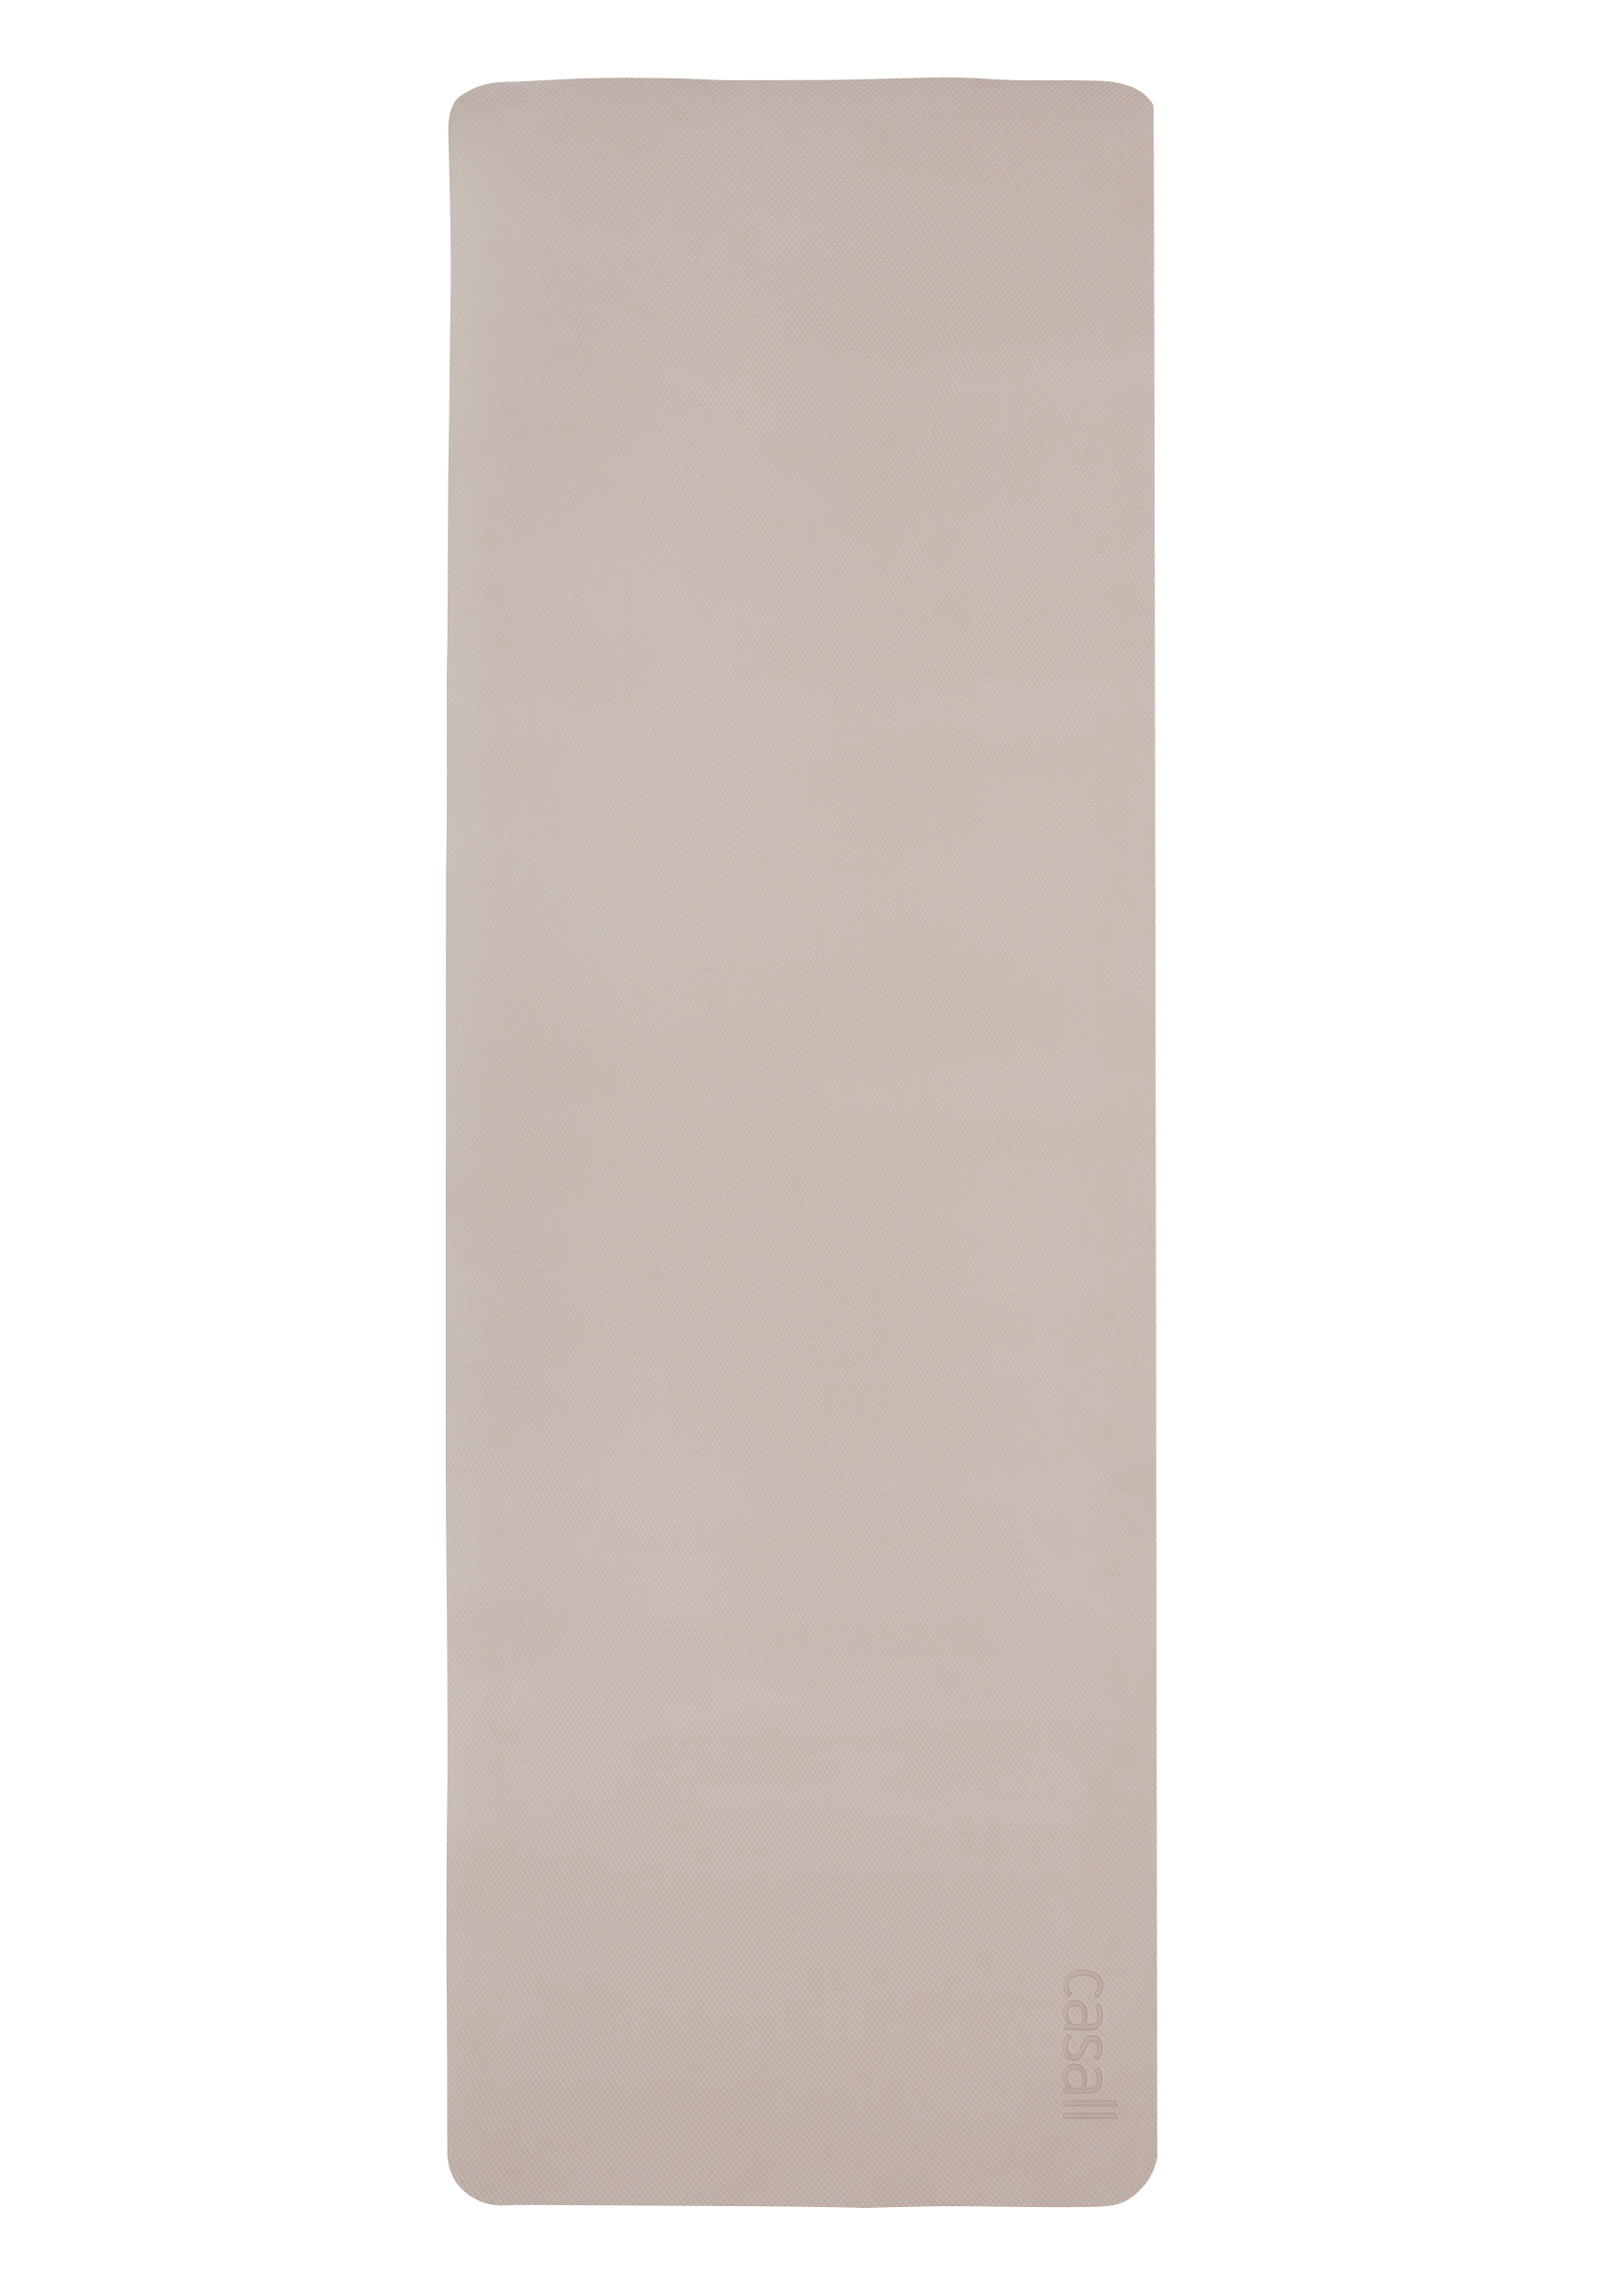 Yoga Mat Essential Balance 4mm - Taupe Grey